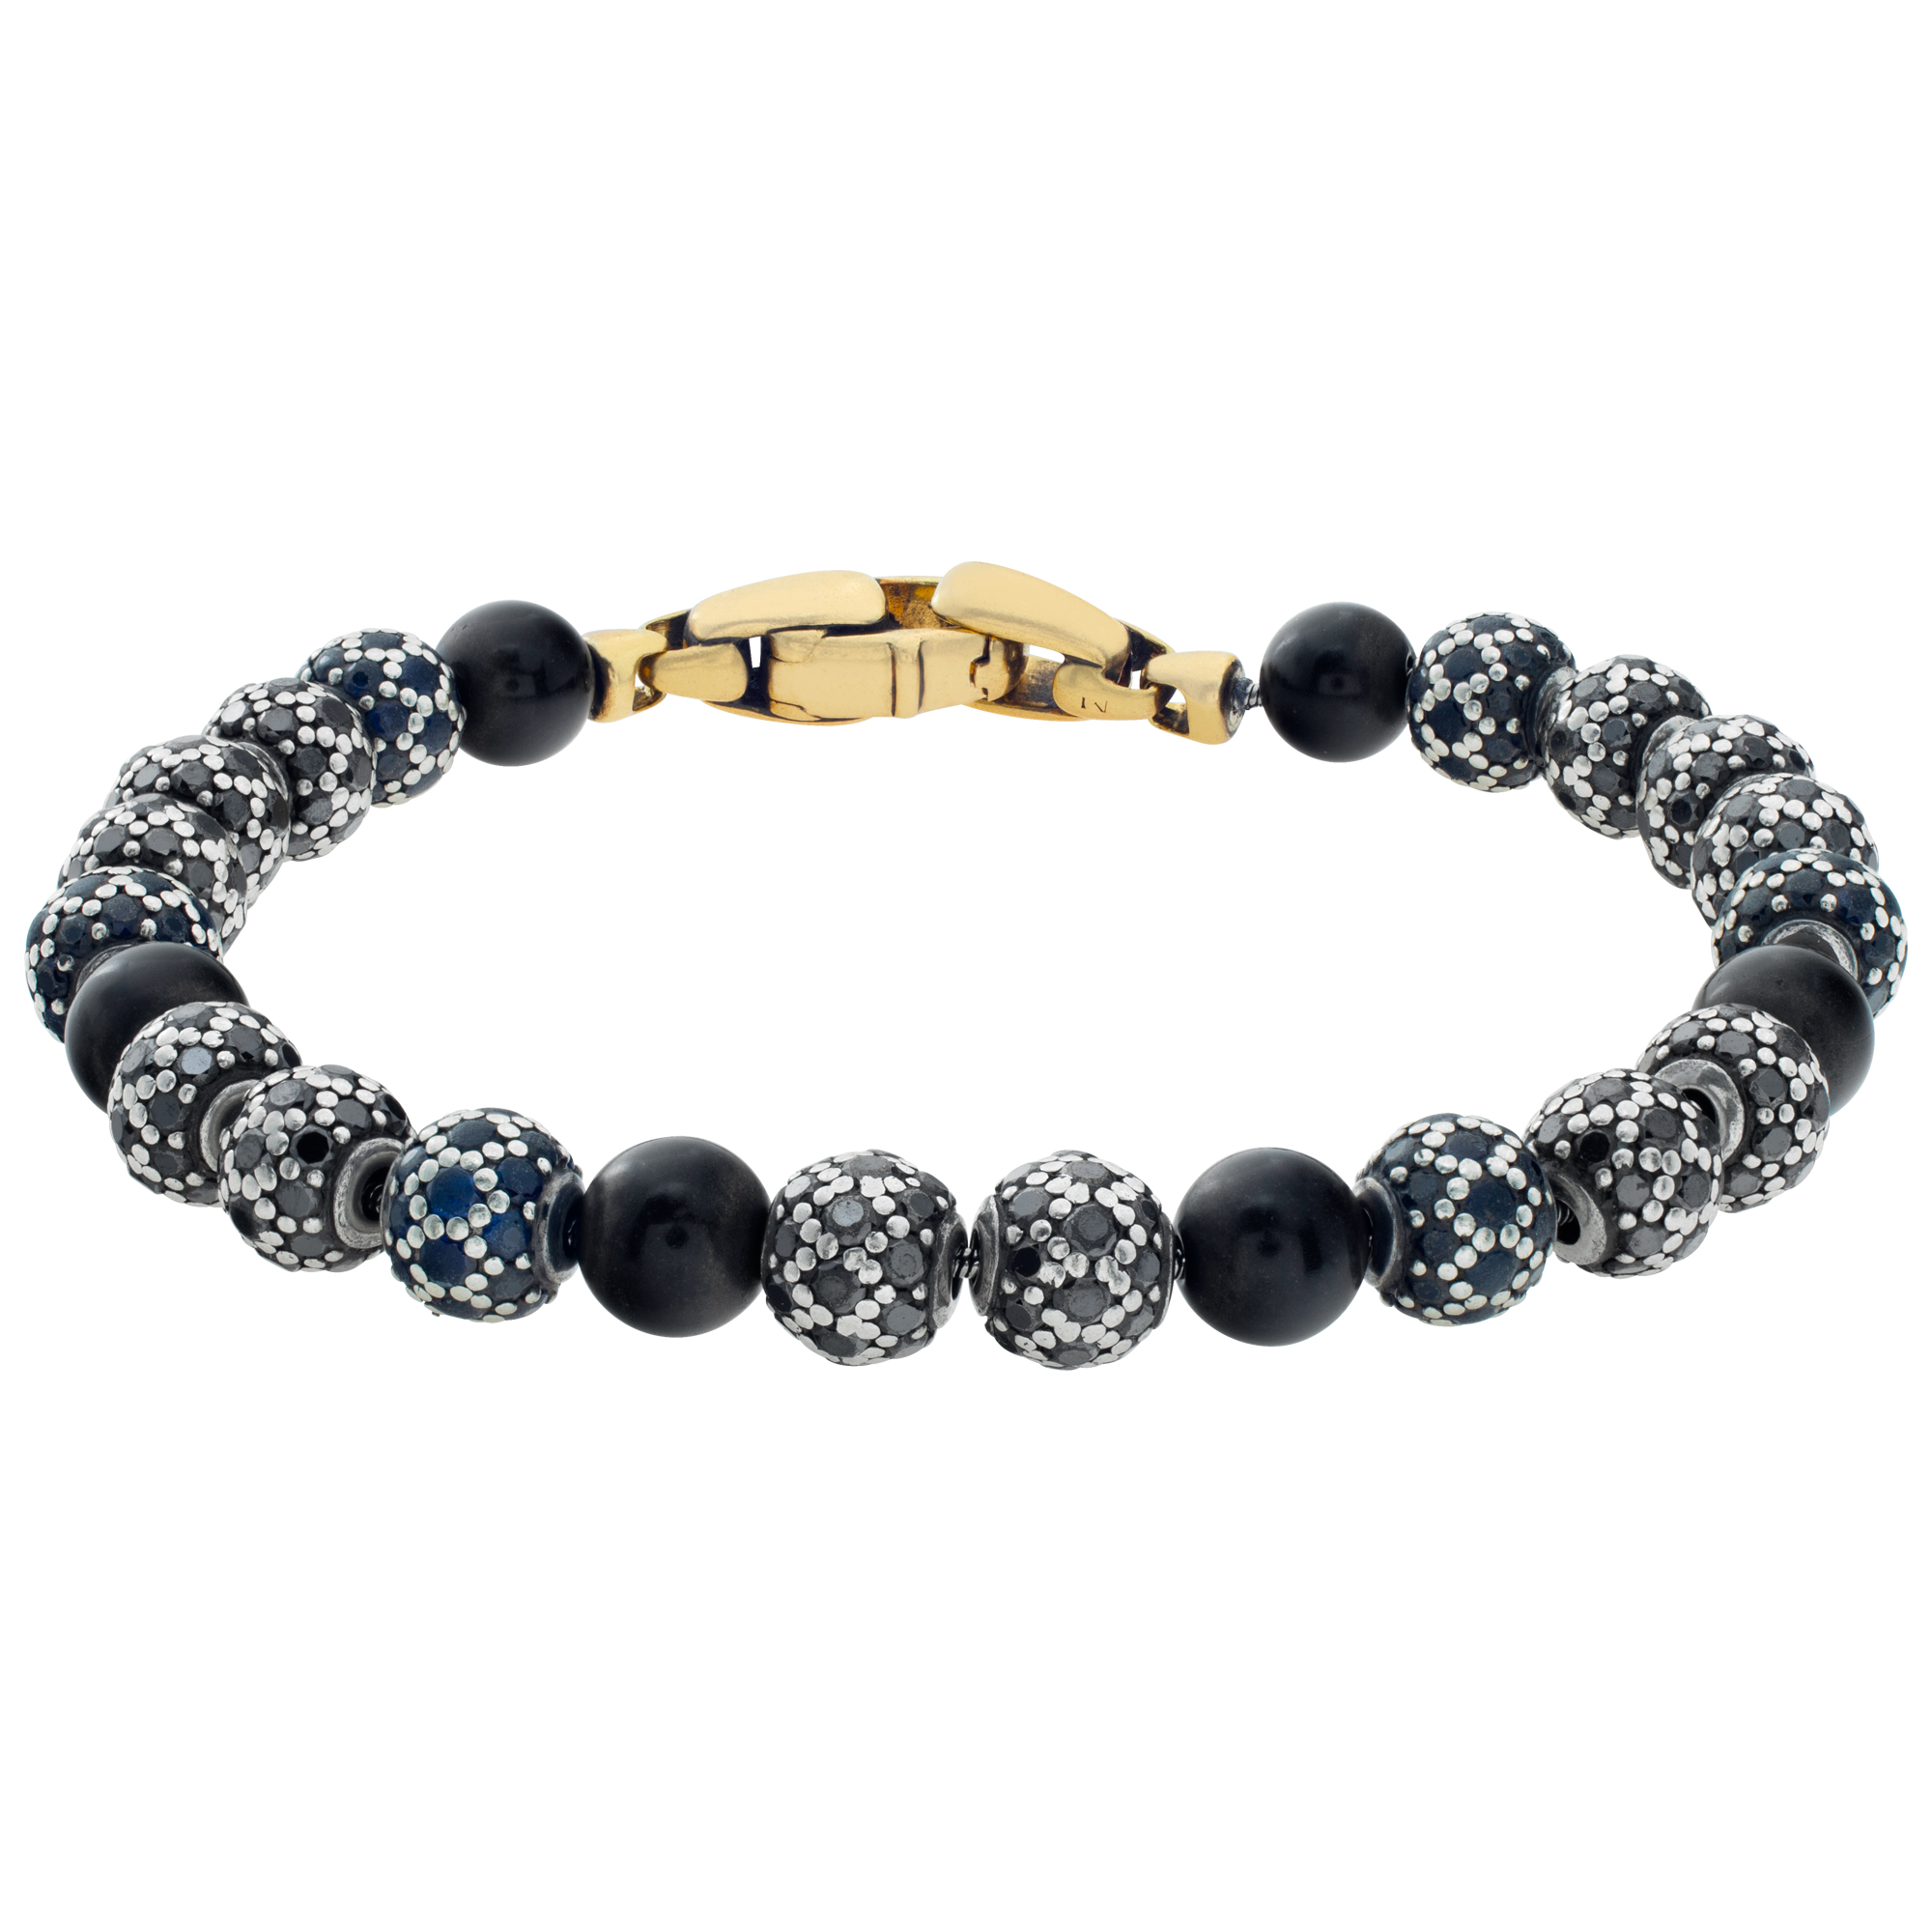 David Yurman Spiritual Bead bracelet with black onyx and black diamonds in 18k